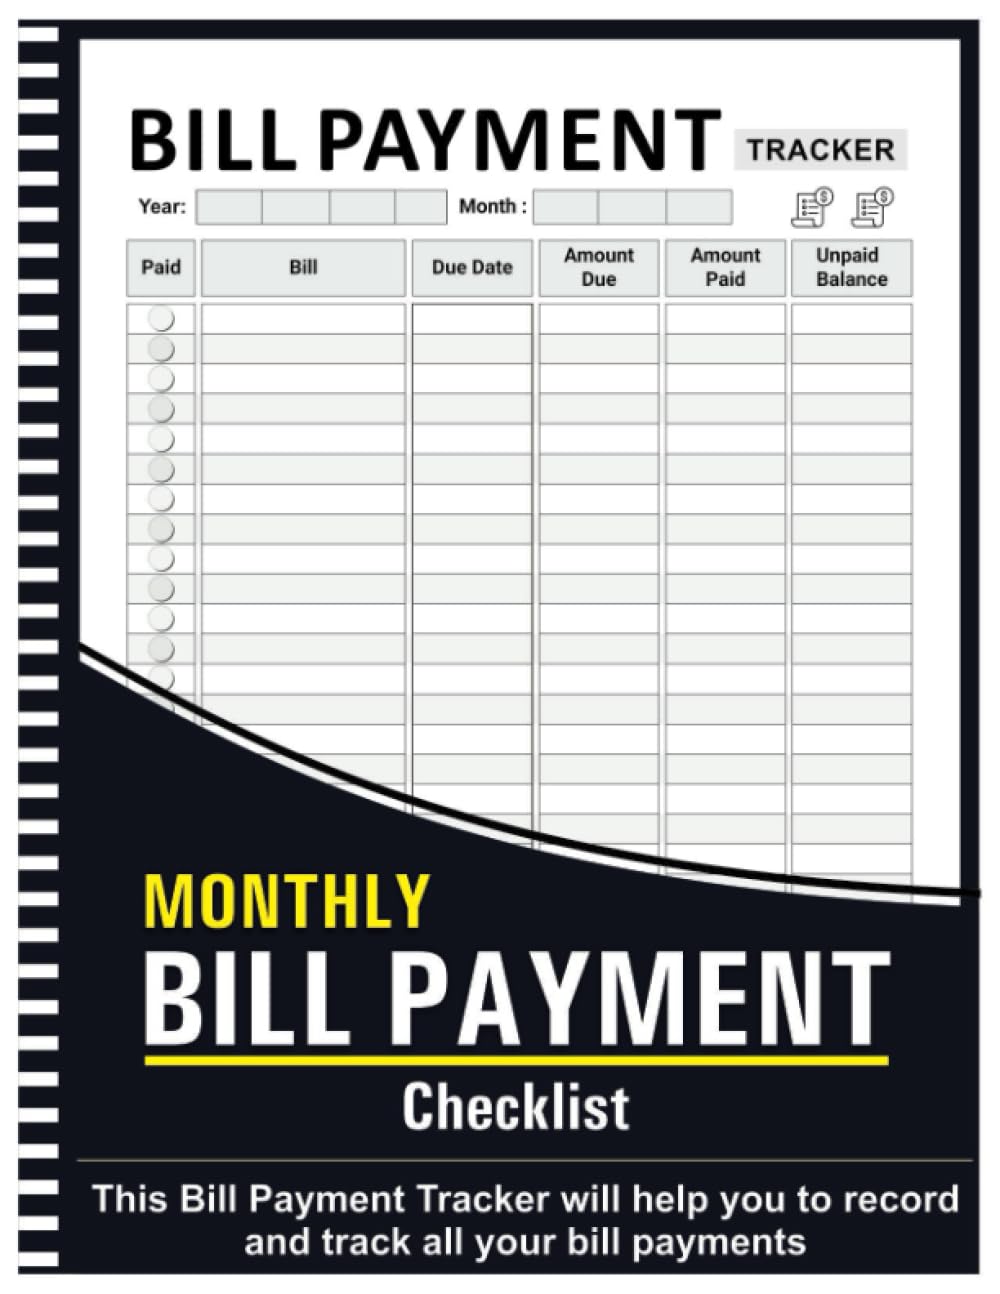 Bill Tracker Notebook: Monthly Bill Organizer & Planner for Budgeting Financial, Finance & Payments Checklist Organizer - 8.5